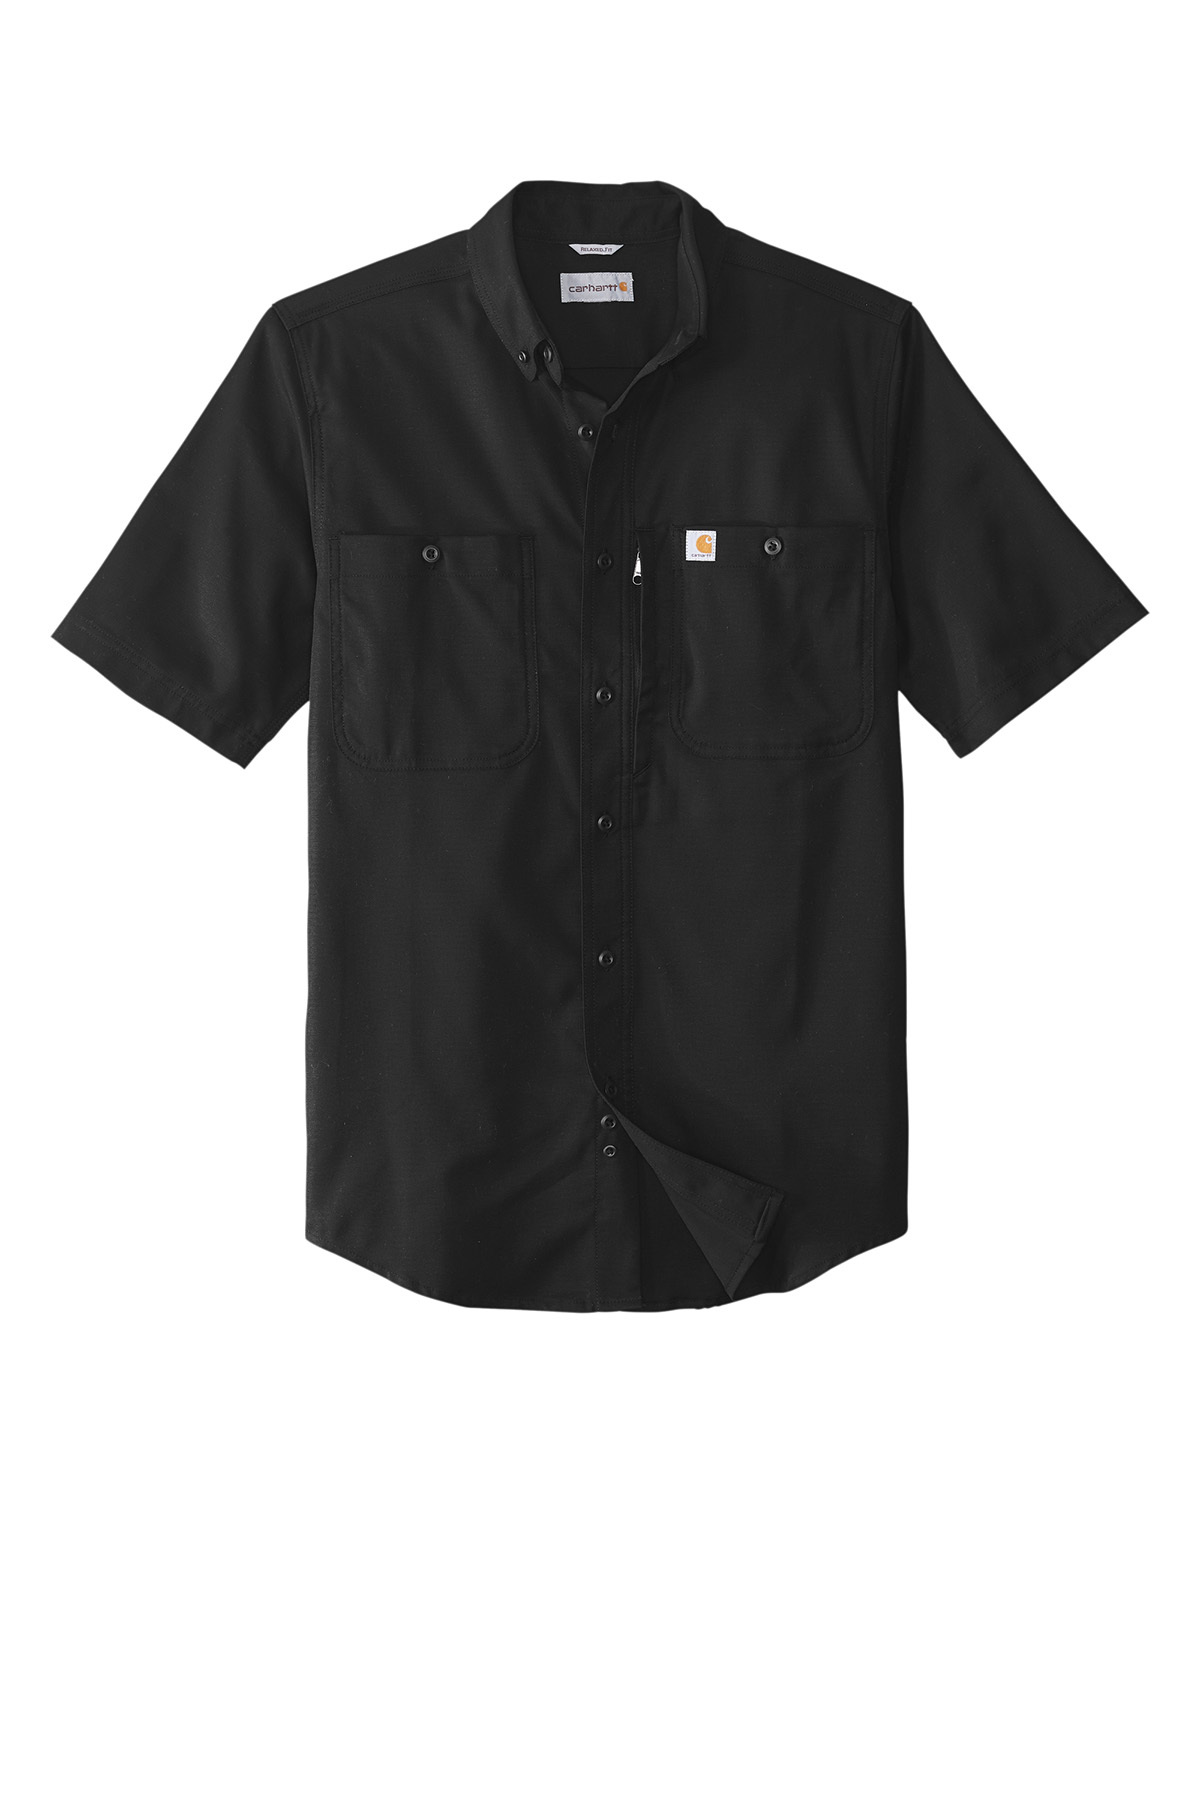 Carhartt Rugged Professional Series Short Sleeve Shirt | Product | SanMar